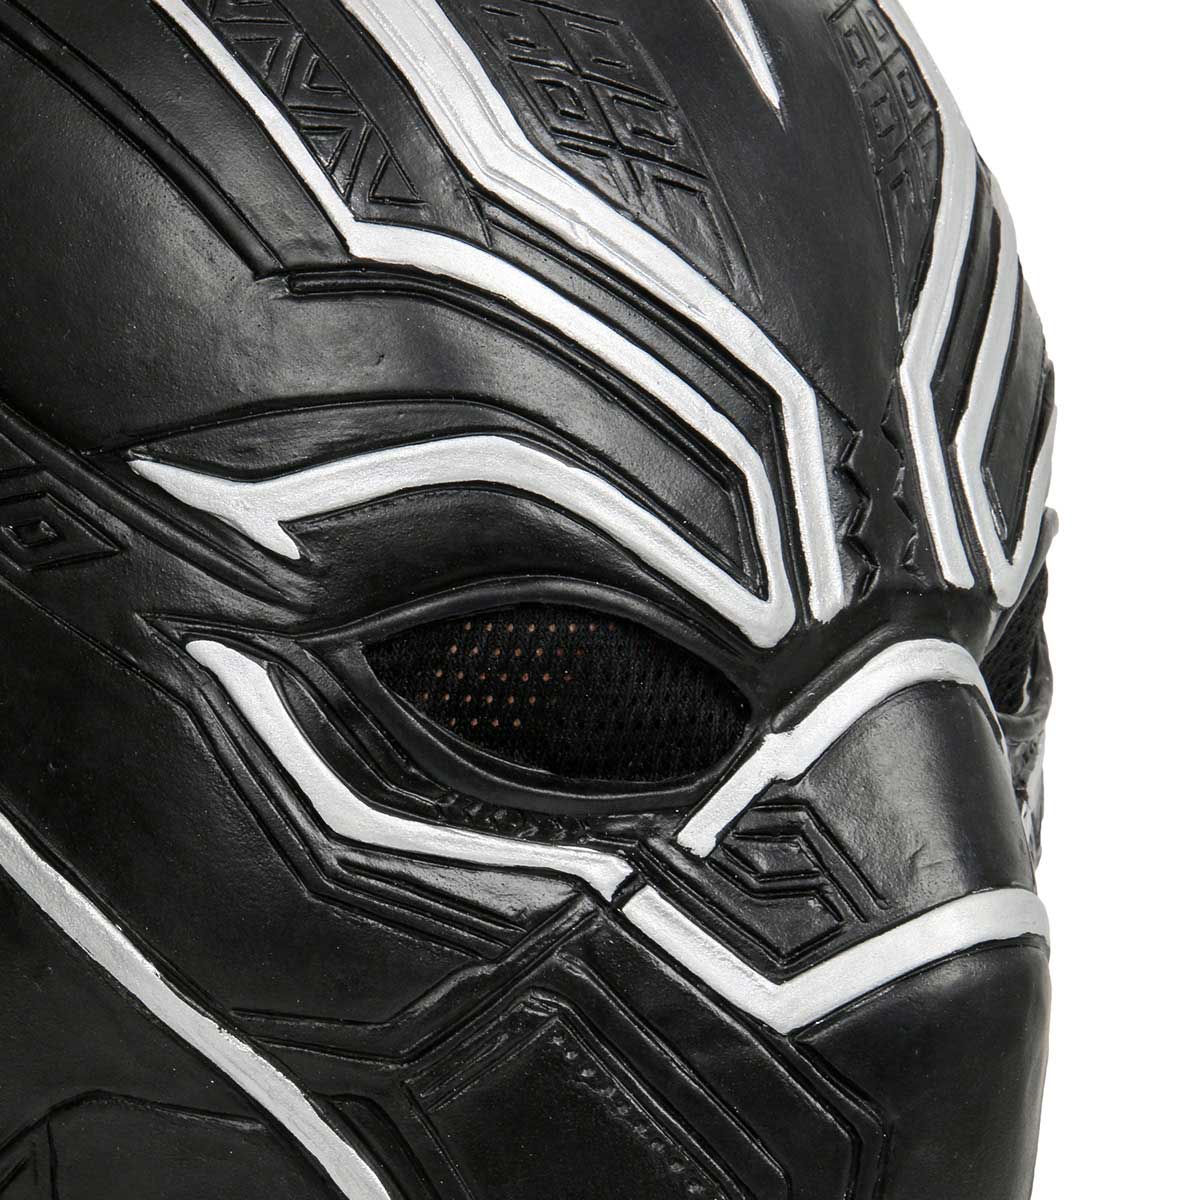 Avenger 3 Captain America Civil War Black Panther Cosplay Mask